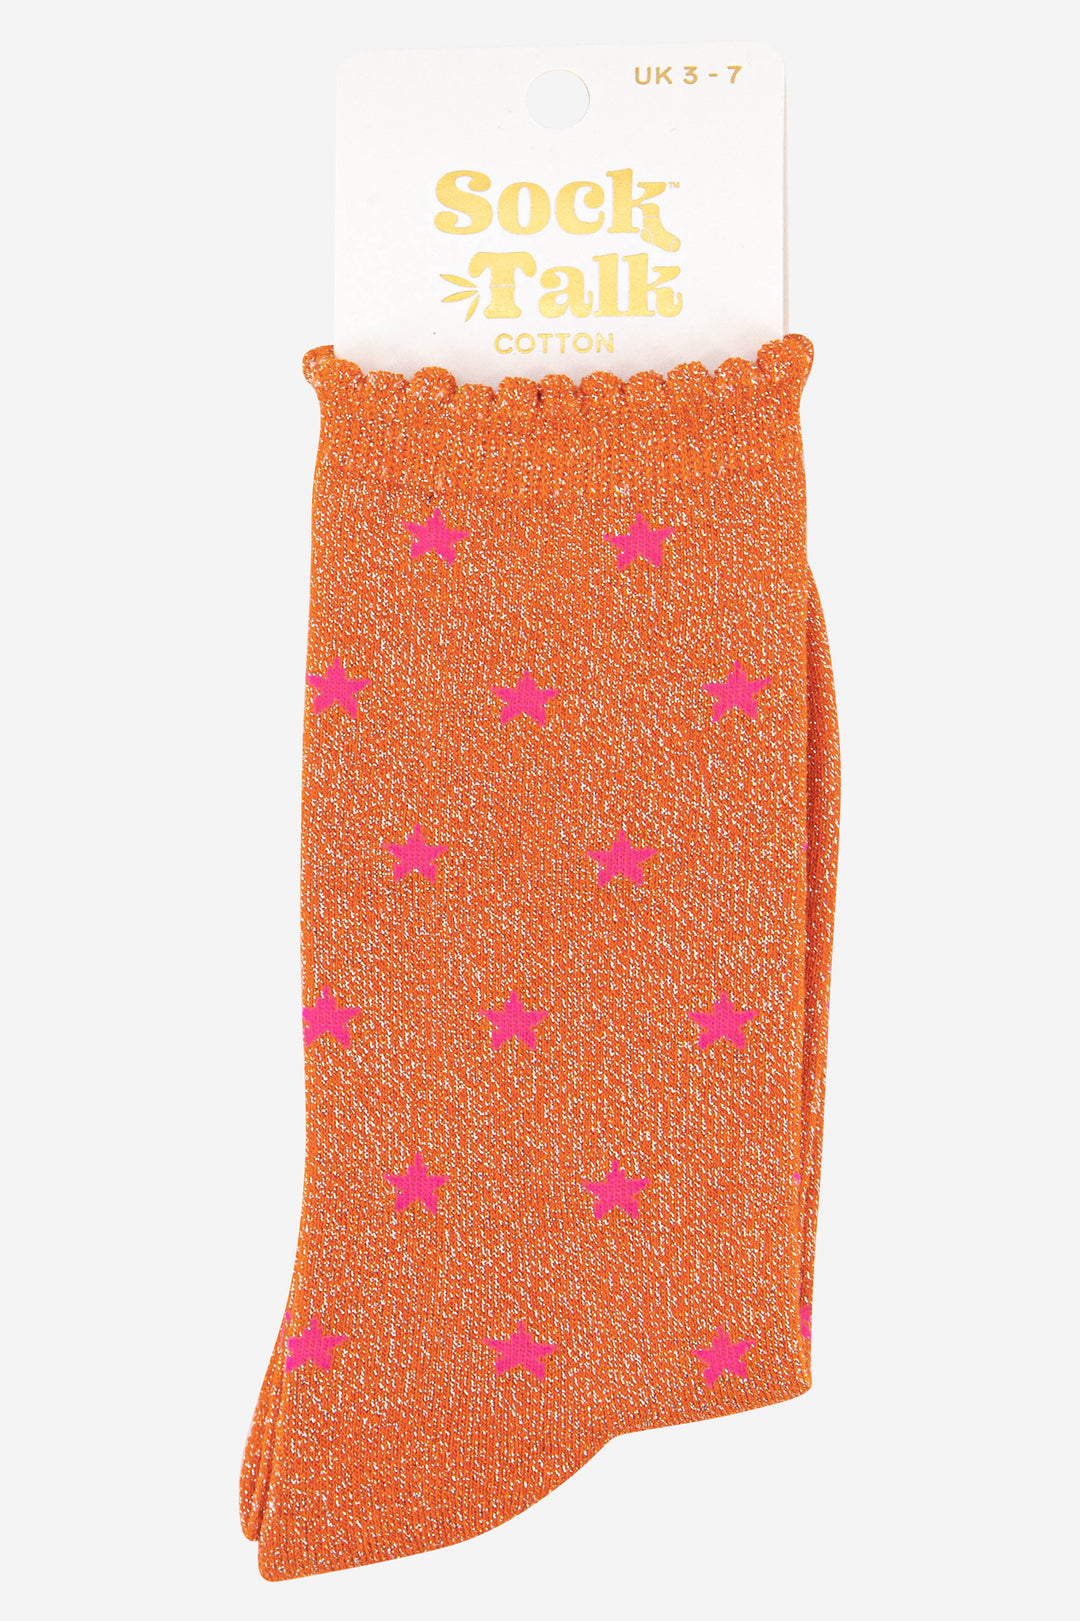 orange glitter ankle socks with pink stars uk size 3-7